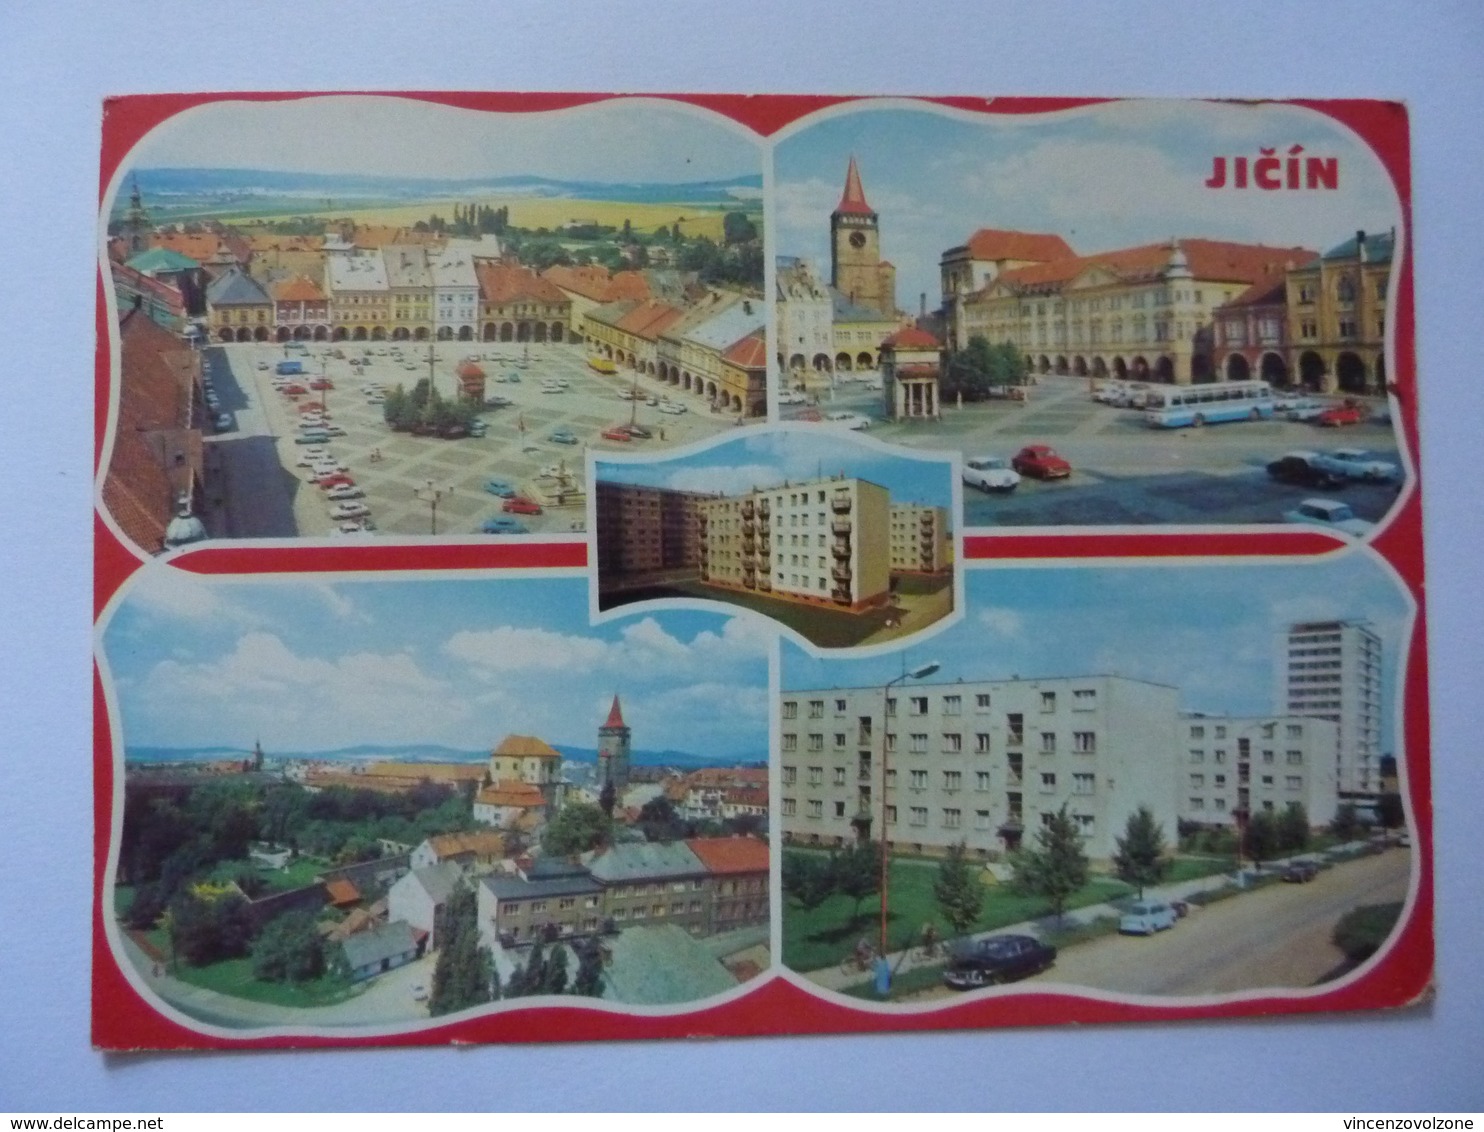 Cartolina "JICIN" - Repubblica Ceca